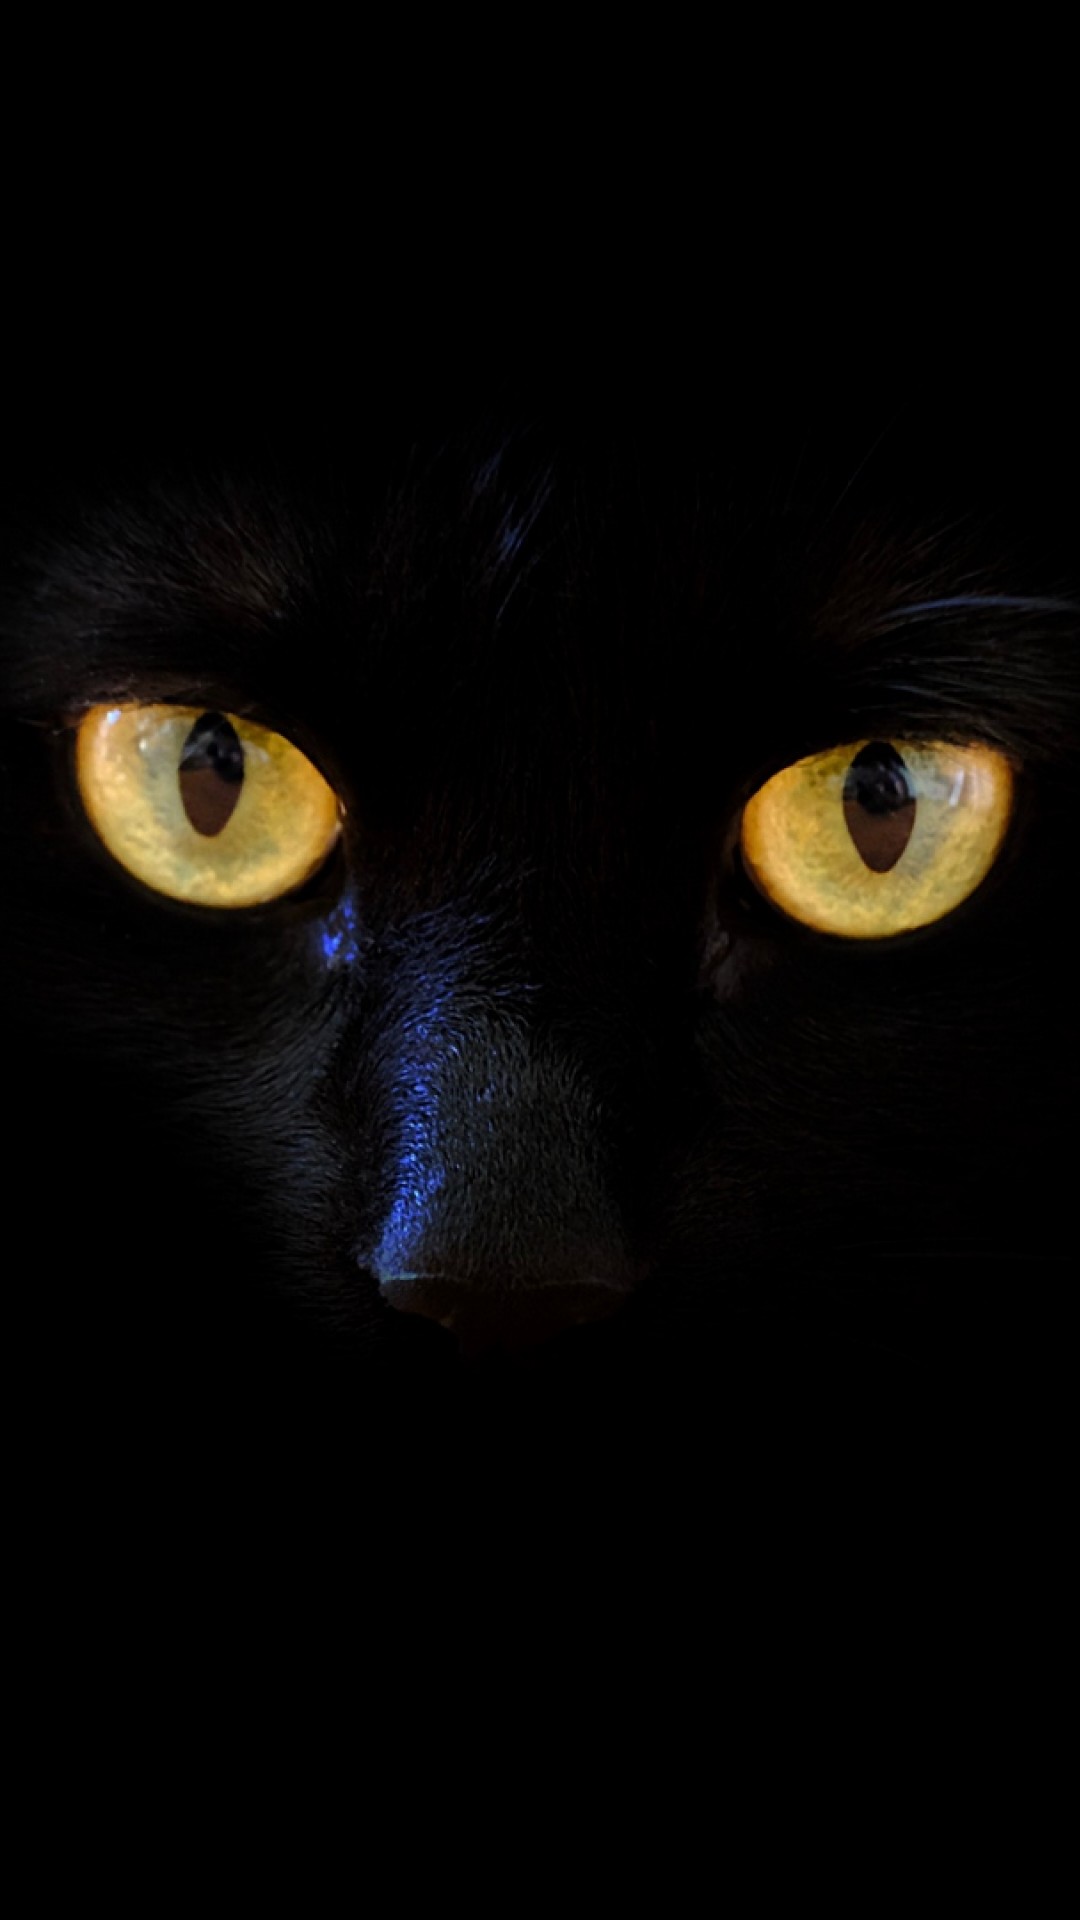 Black cat's eyes HD Wallpaper iPhone 6 / 6S Plus - HD Wallpaper - Wallpapers .net